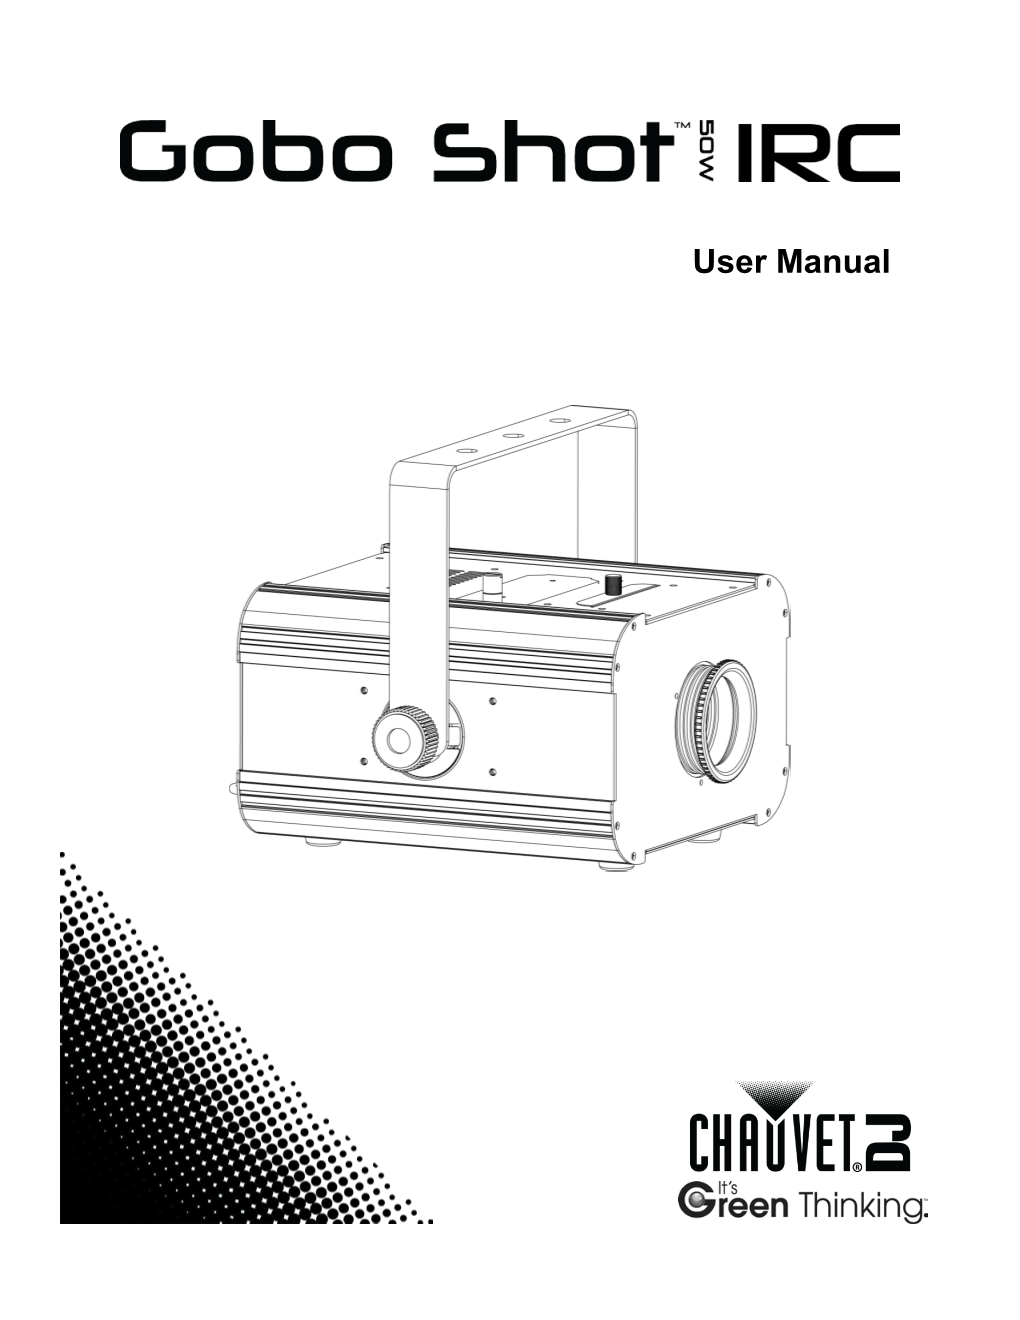 Gobo Shot 50W IRC User Manual Rev. 5